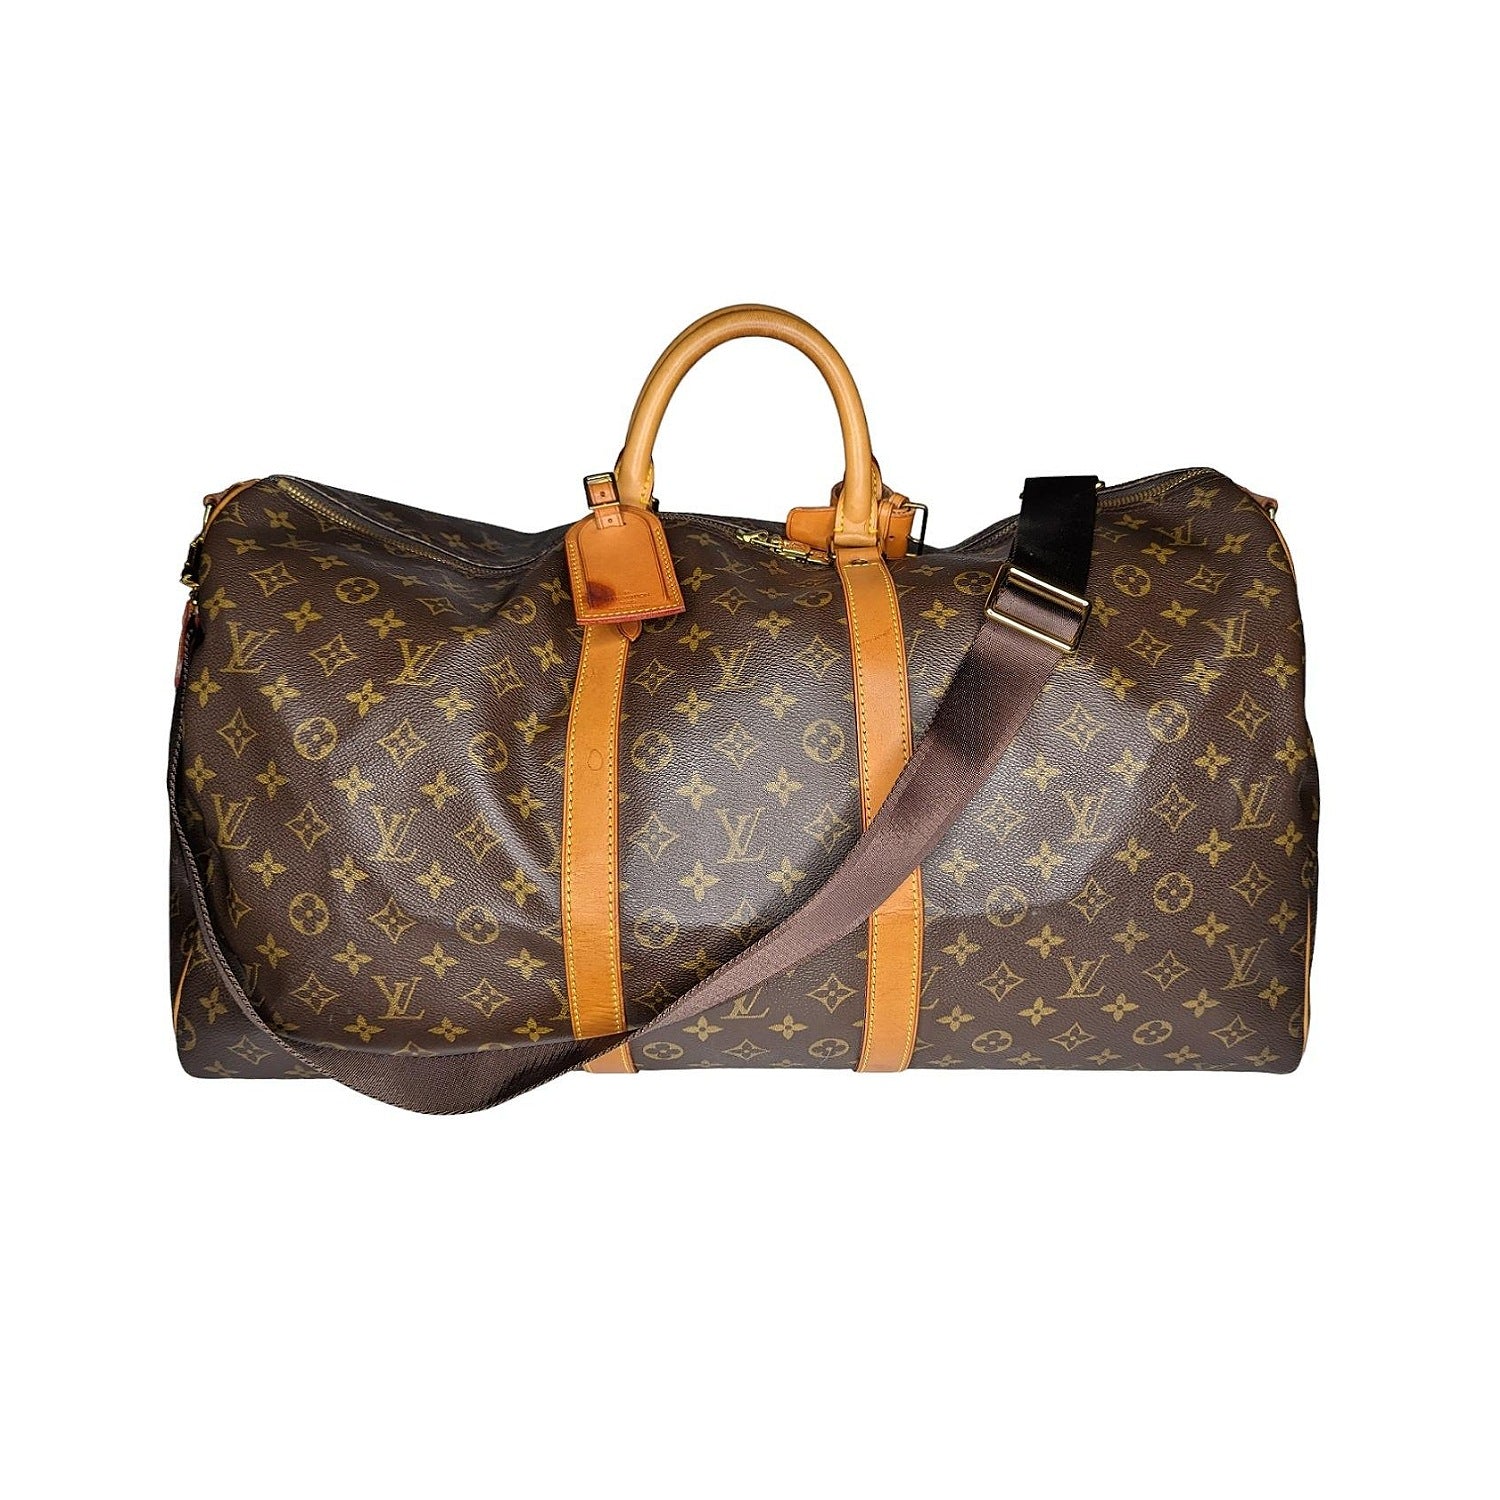 Louis Vuitton Vachetta Luggage Tag w/ Keepall Strap Holder